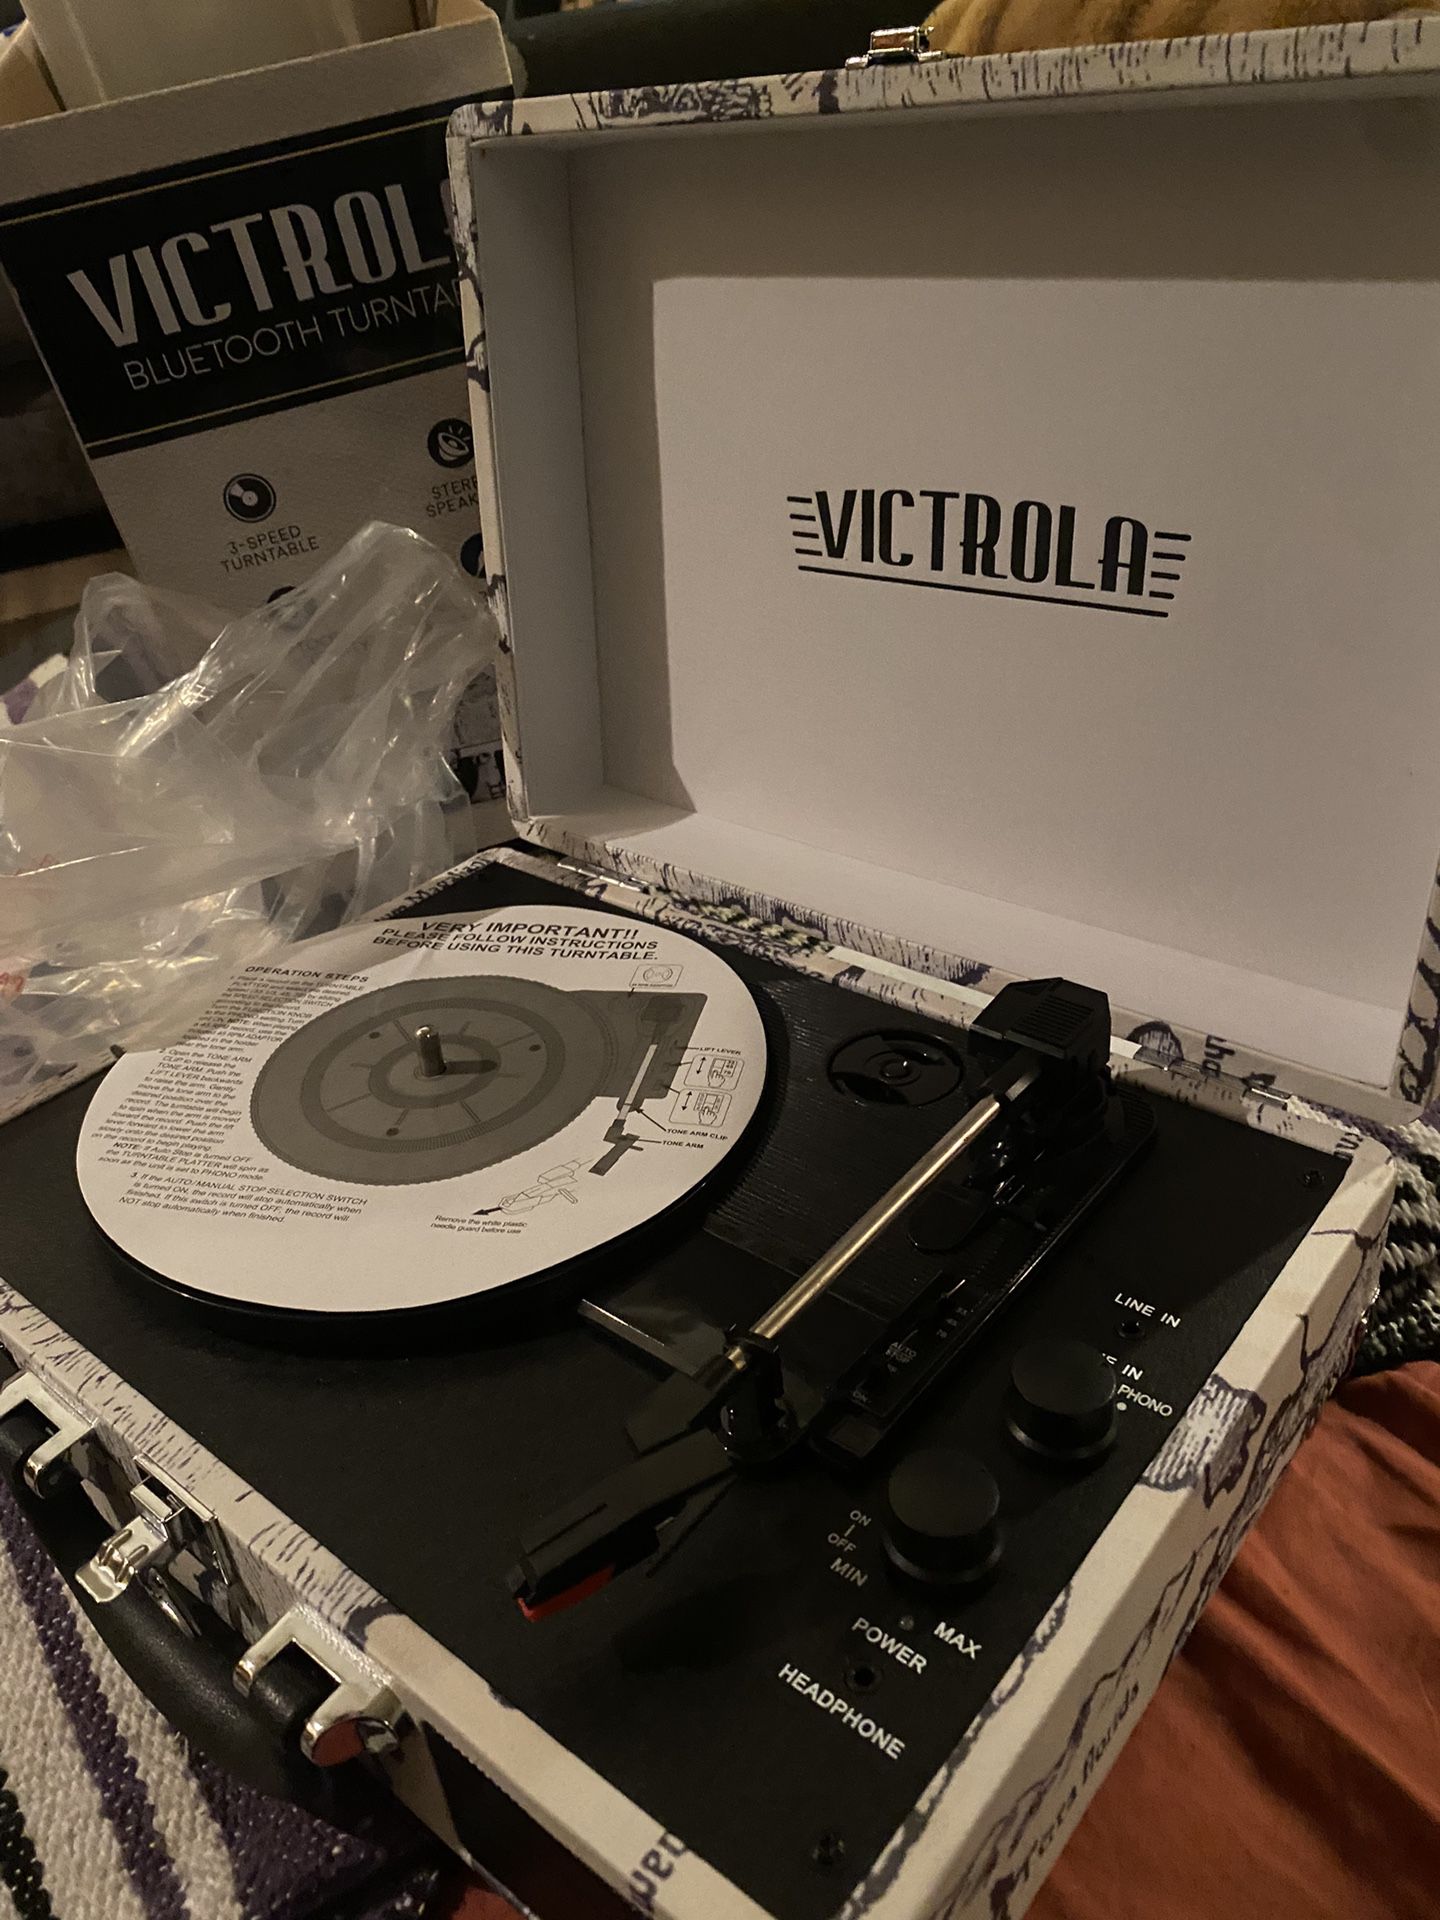 Victrola Record Player